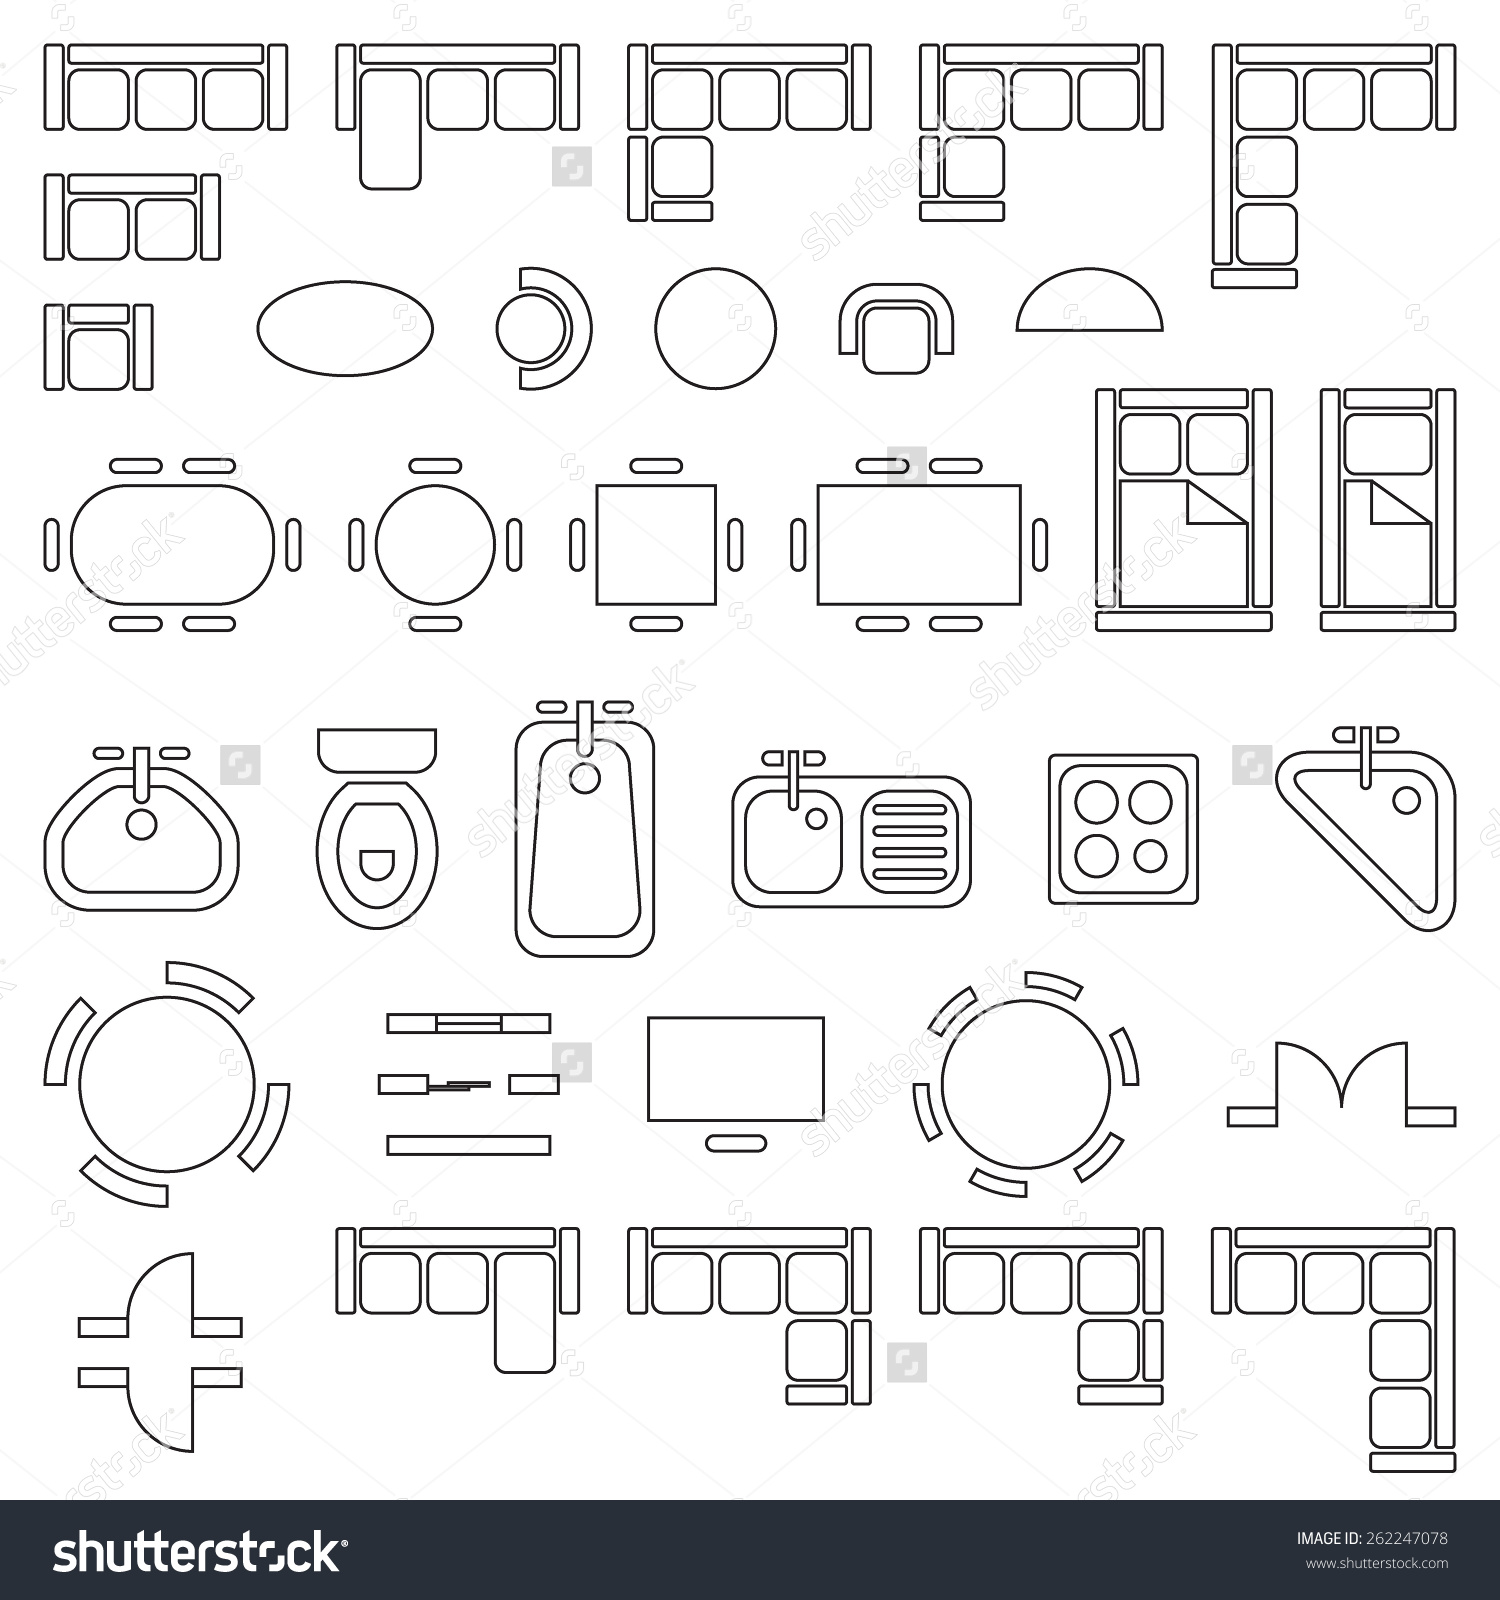 Floor Plan Symbols Chart